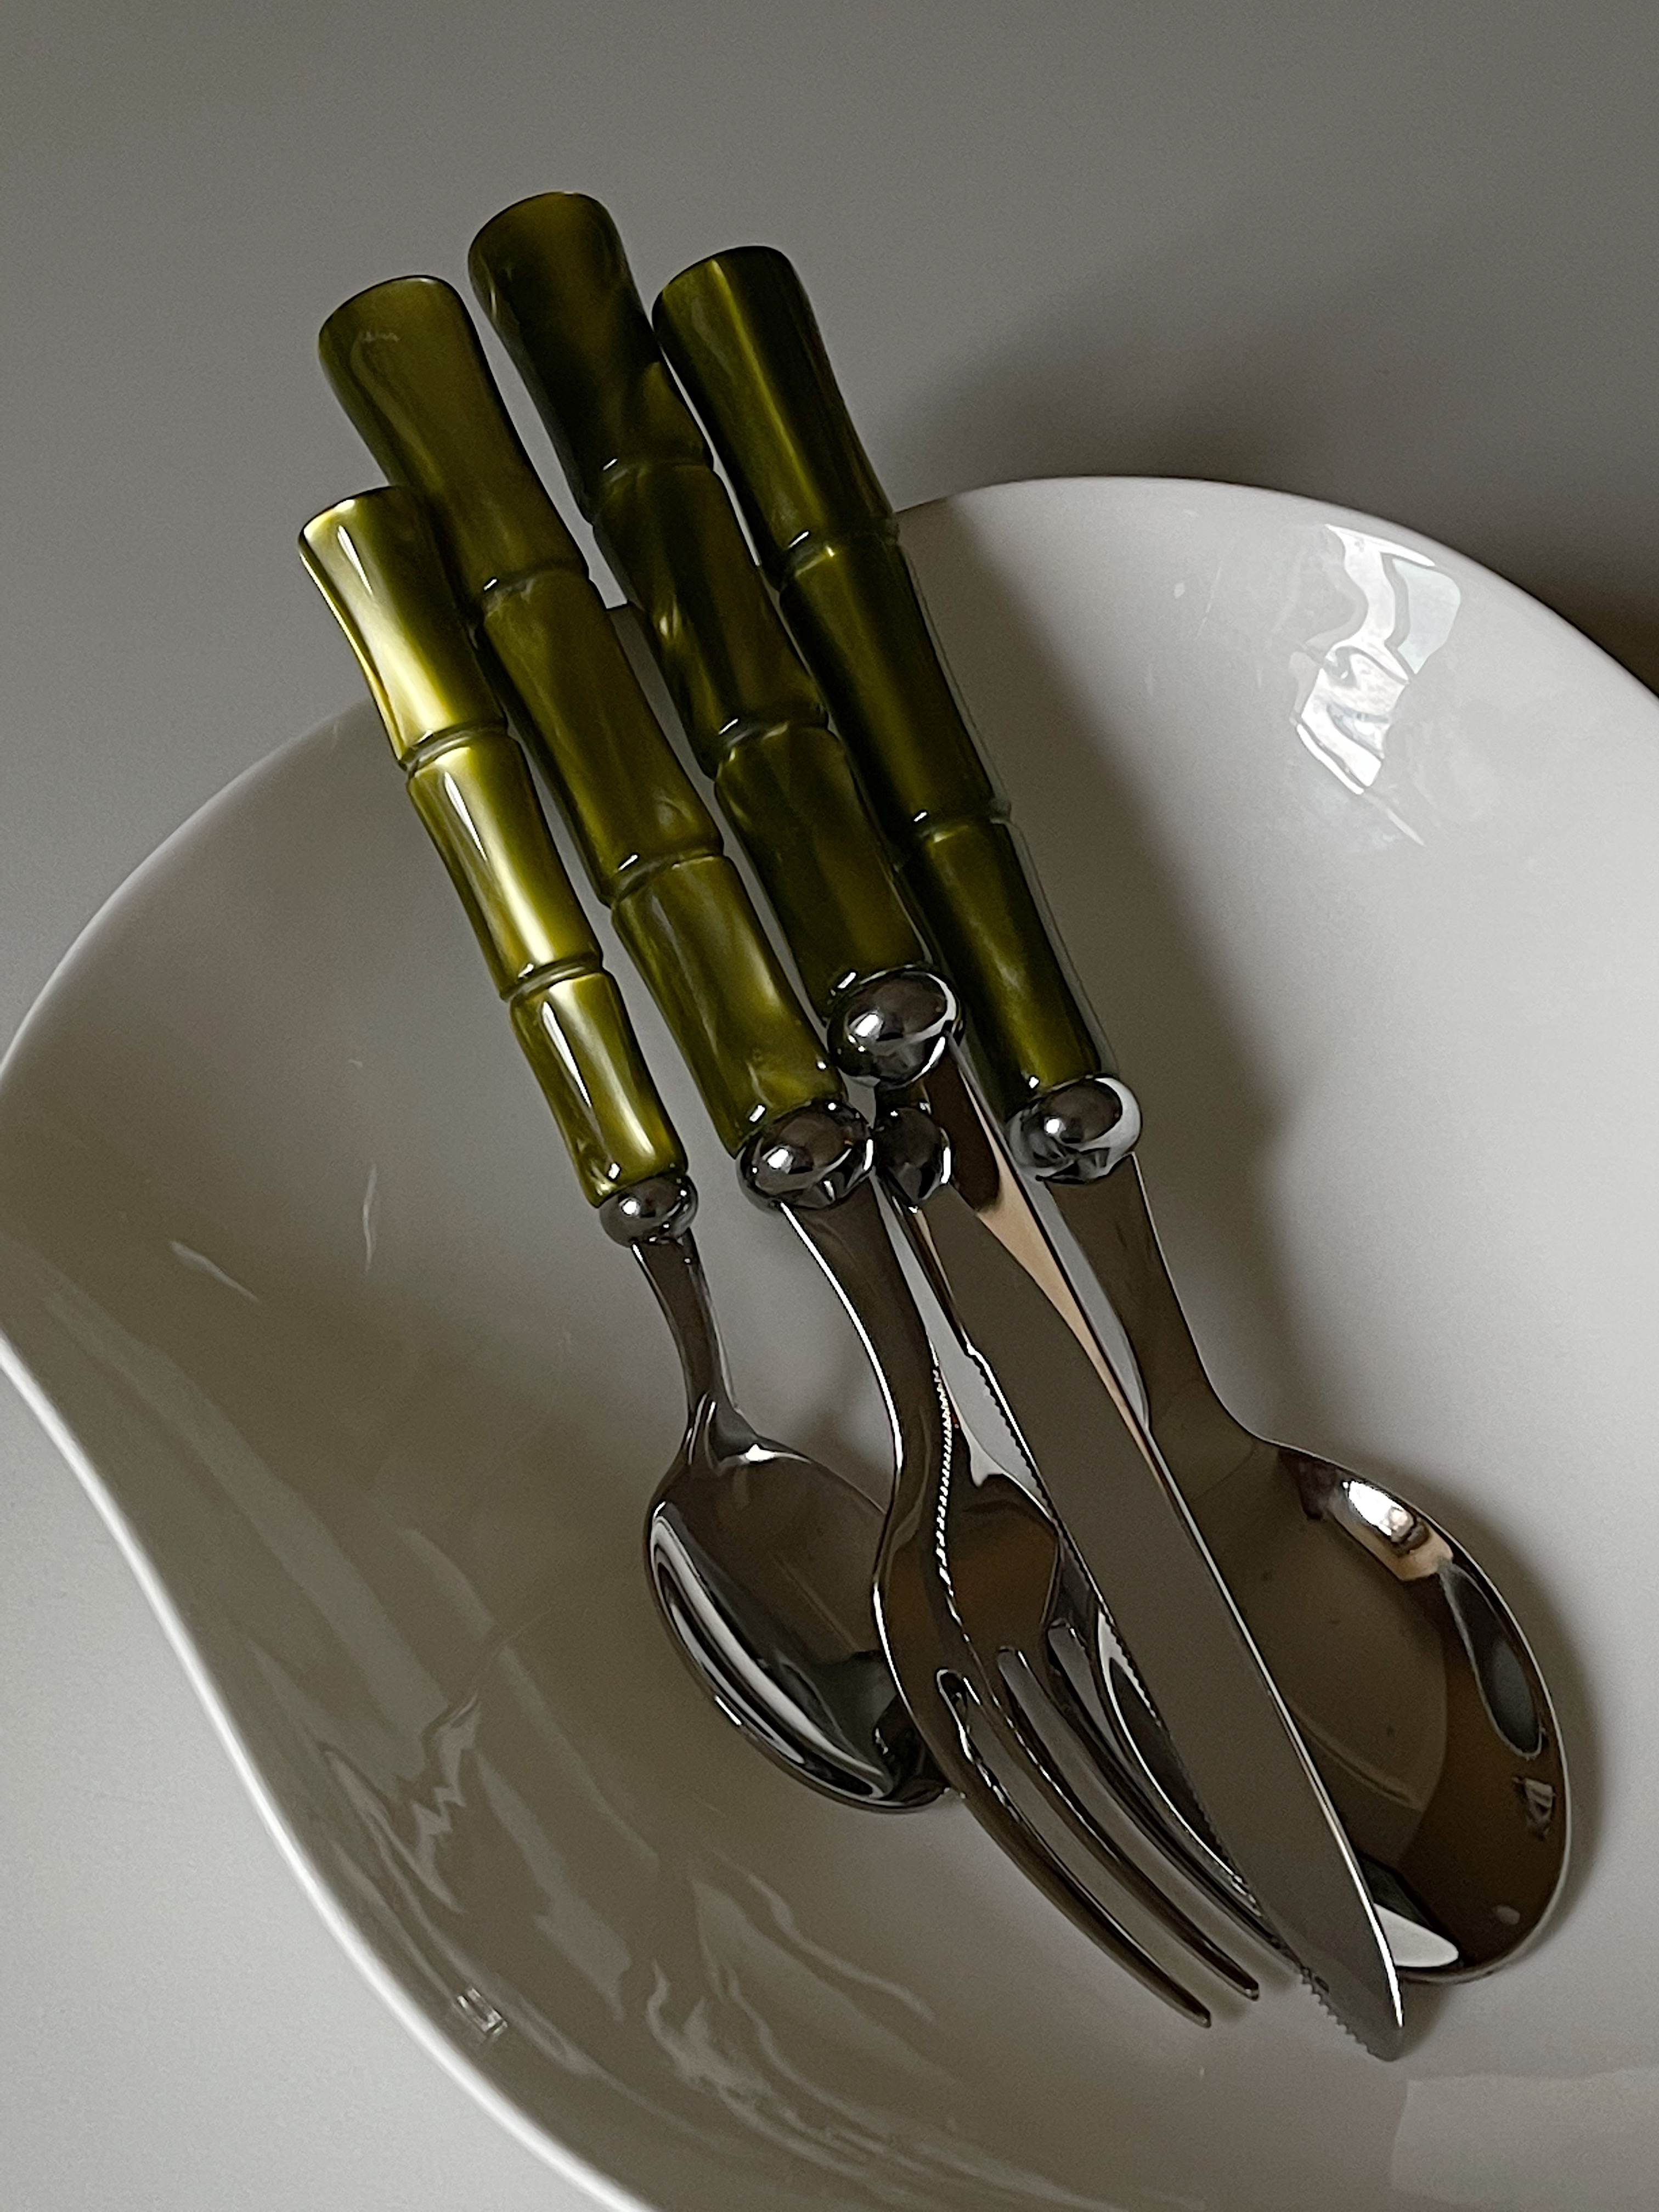 [YURUUI设计师]意大利Rivadossi橄榄绿/深绿色竹节刀叉勺西餐餐具 - 图1